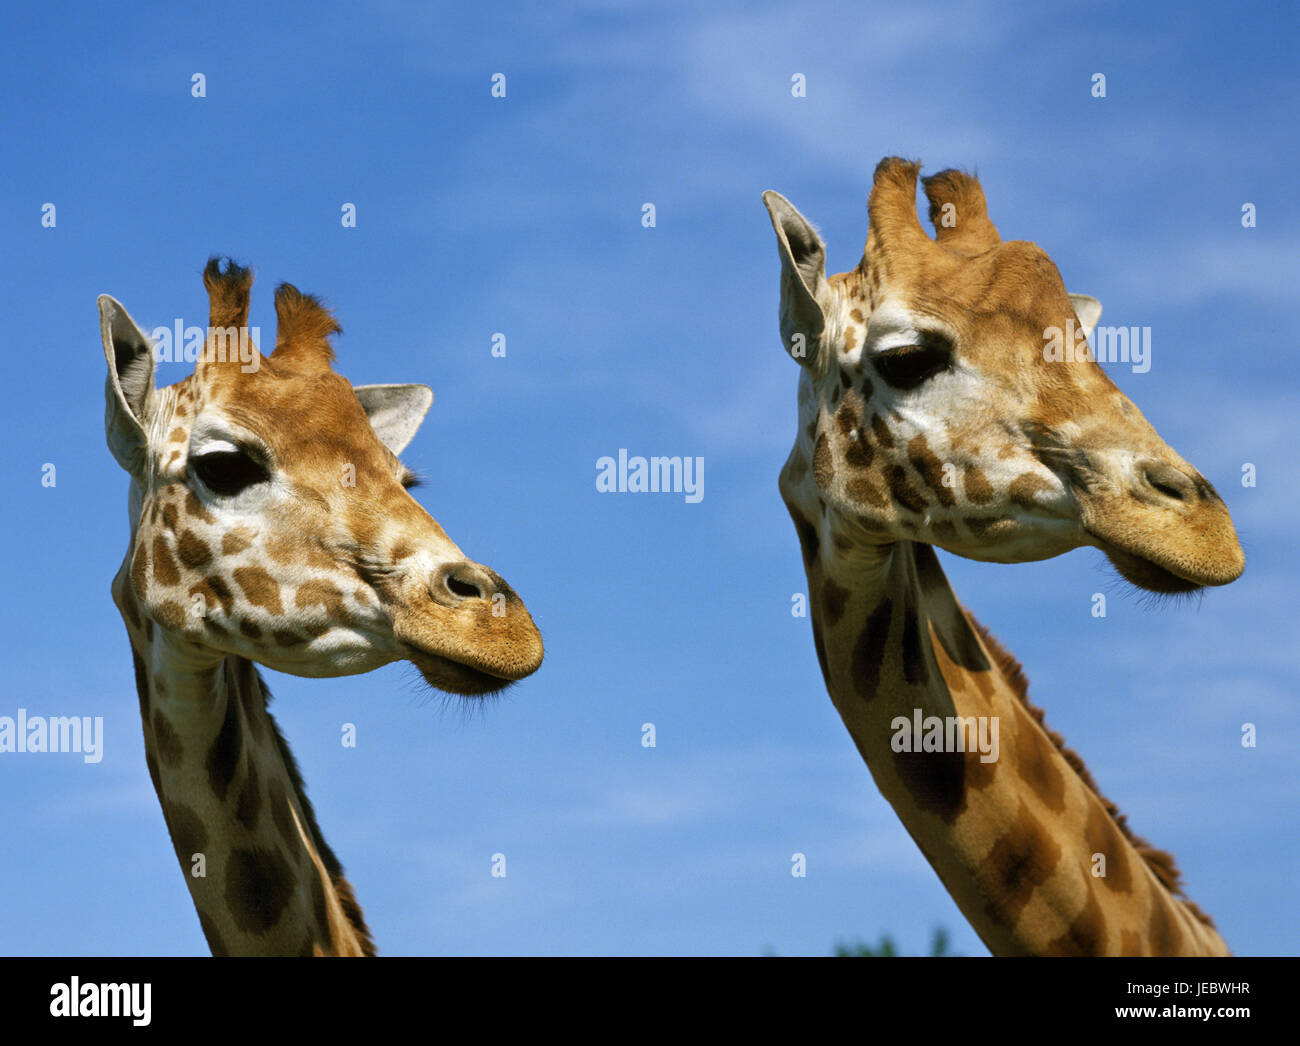 Two Uganda-Giraffem, Giraffa camelopardalis rothschildi, view at the side, portrait, Stock Photo